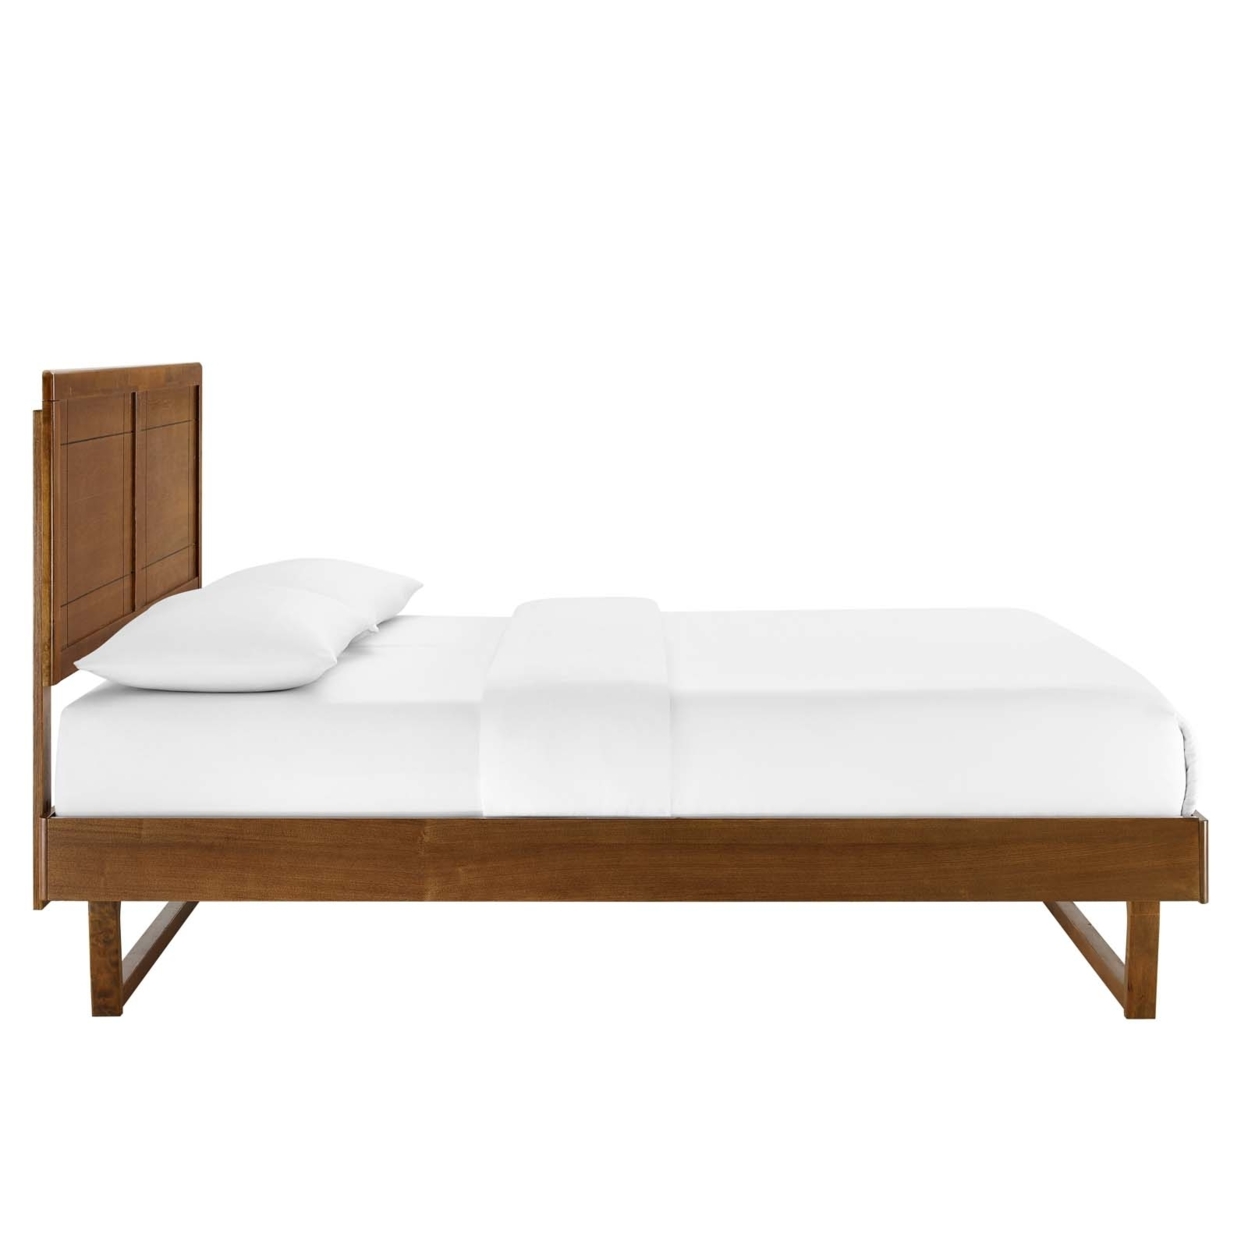 Marlee Queen Wood Platform Bed With Angular Frame, Walnut